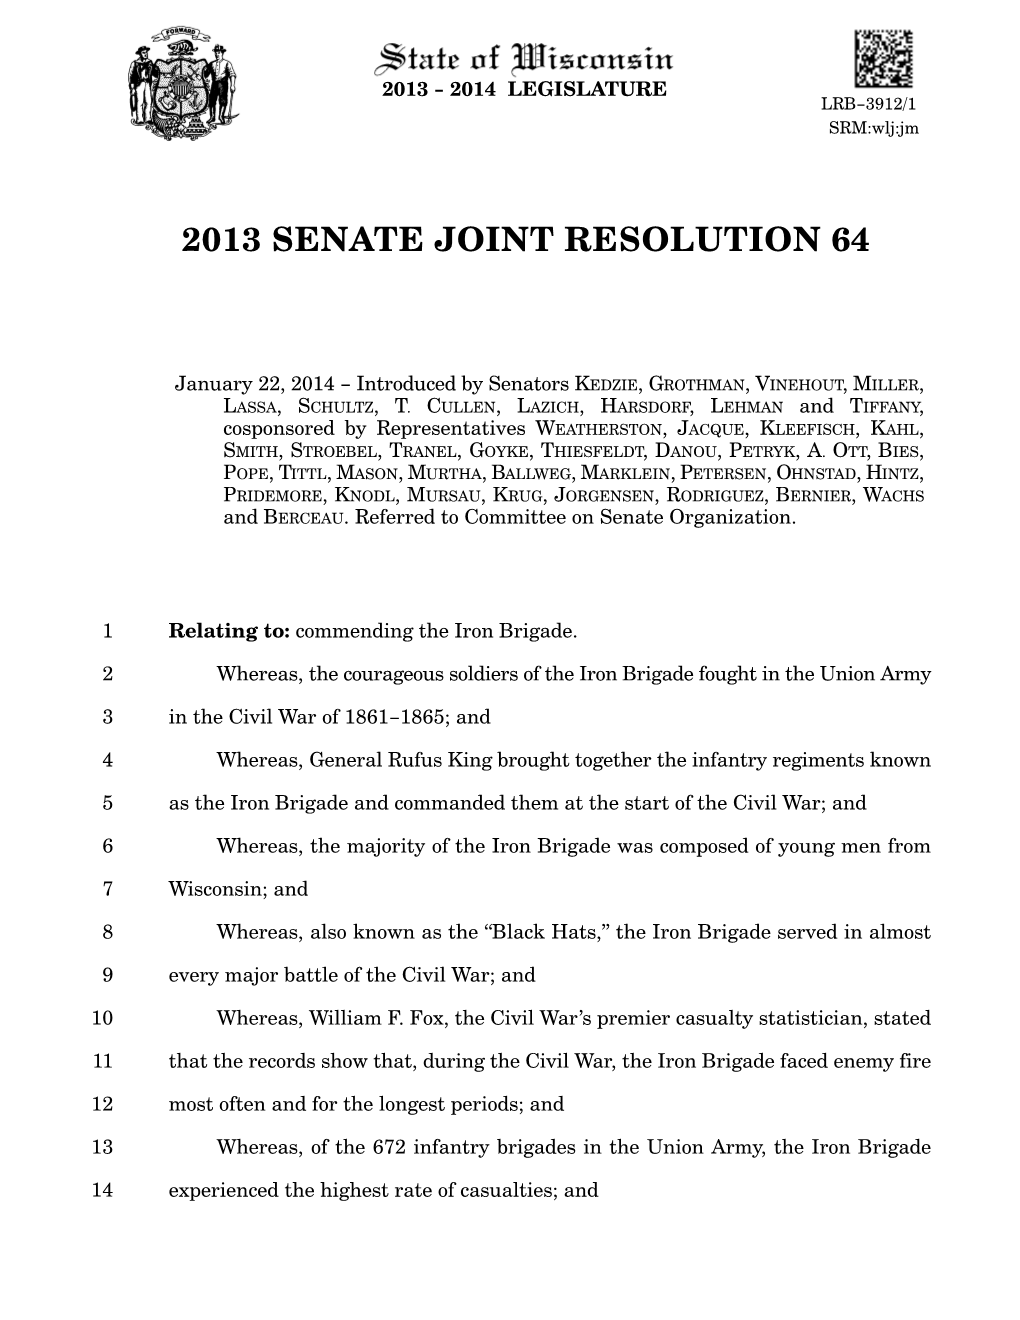 2013 Senate Joint Resolution 64